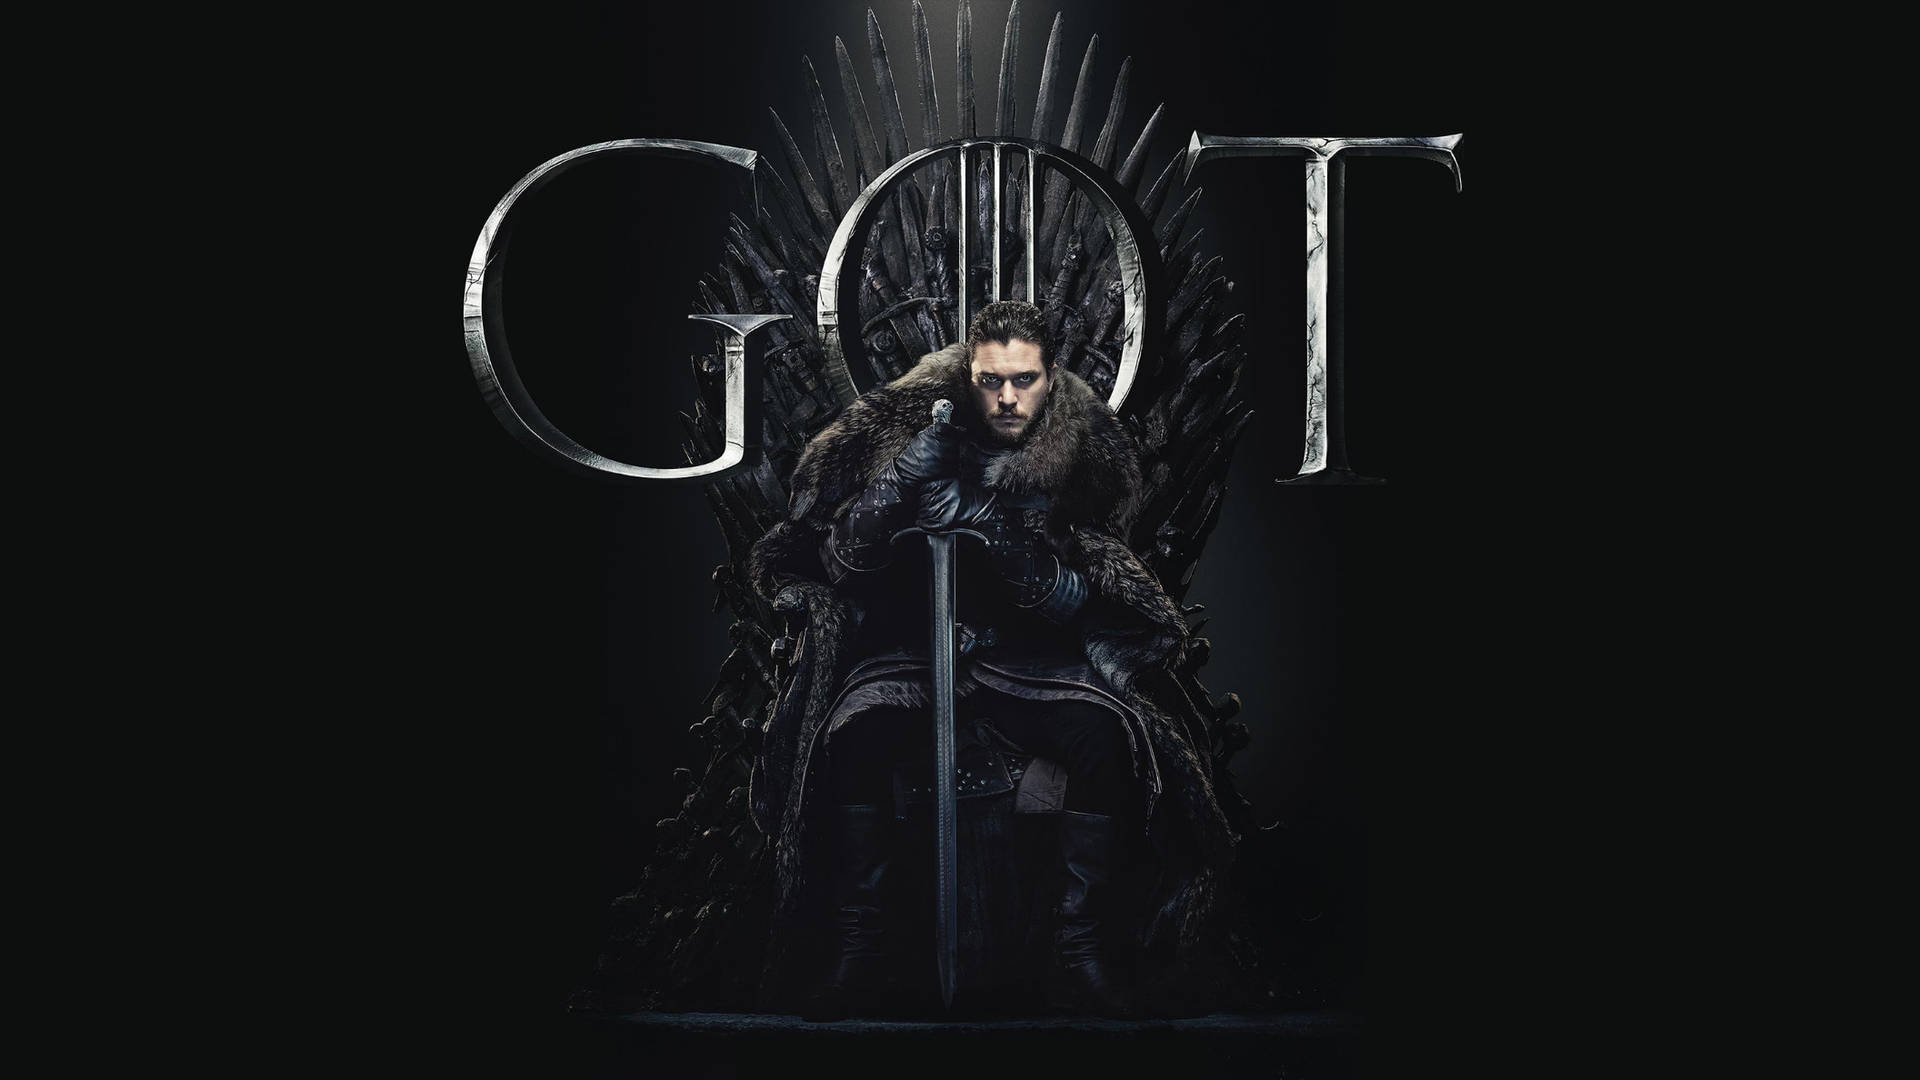 Free Jon Snow Game Of Thrones Wallpaper Downloads, [100+] Jon Snow Game Of  Thrones Wallpapers for FREE 